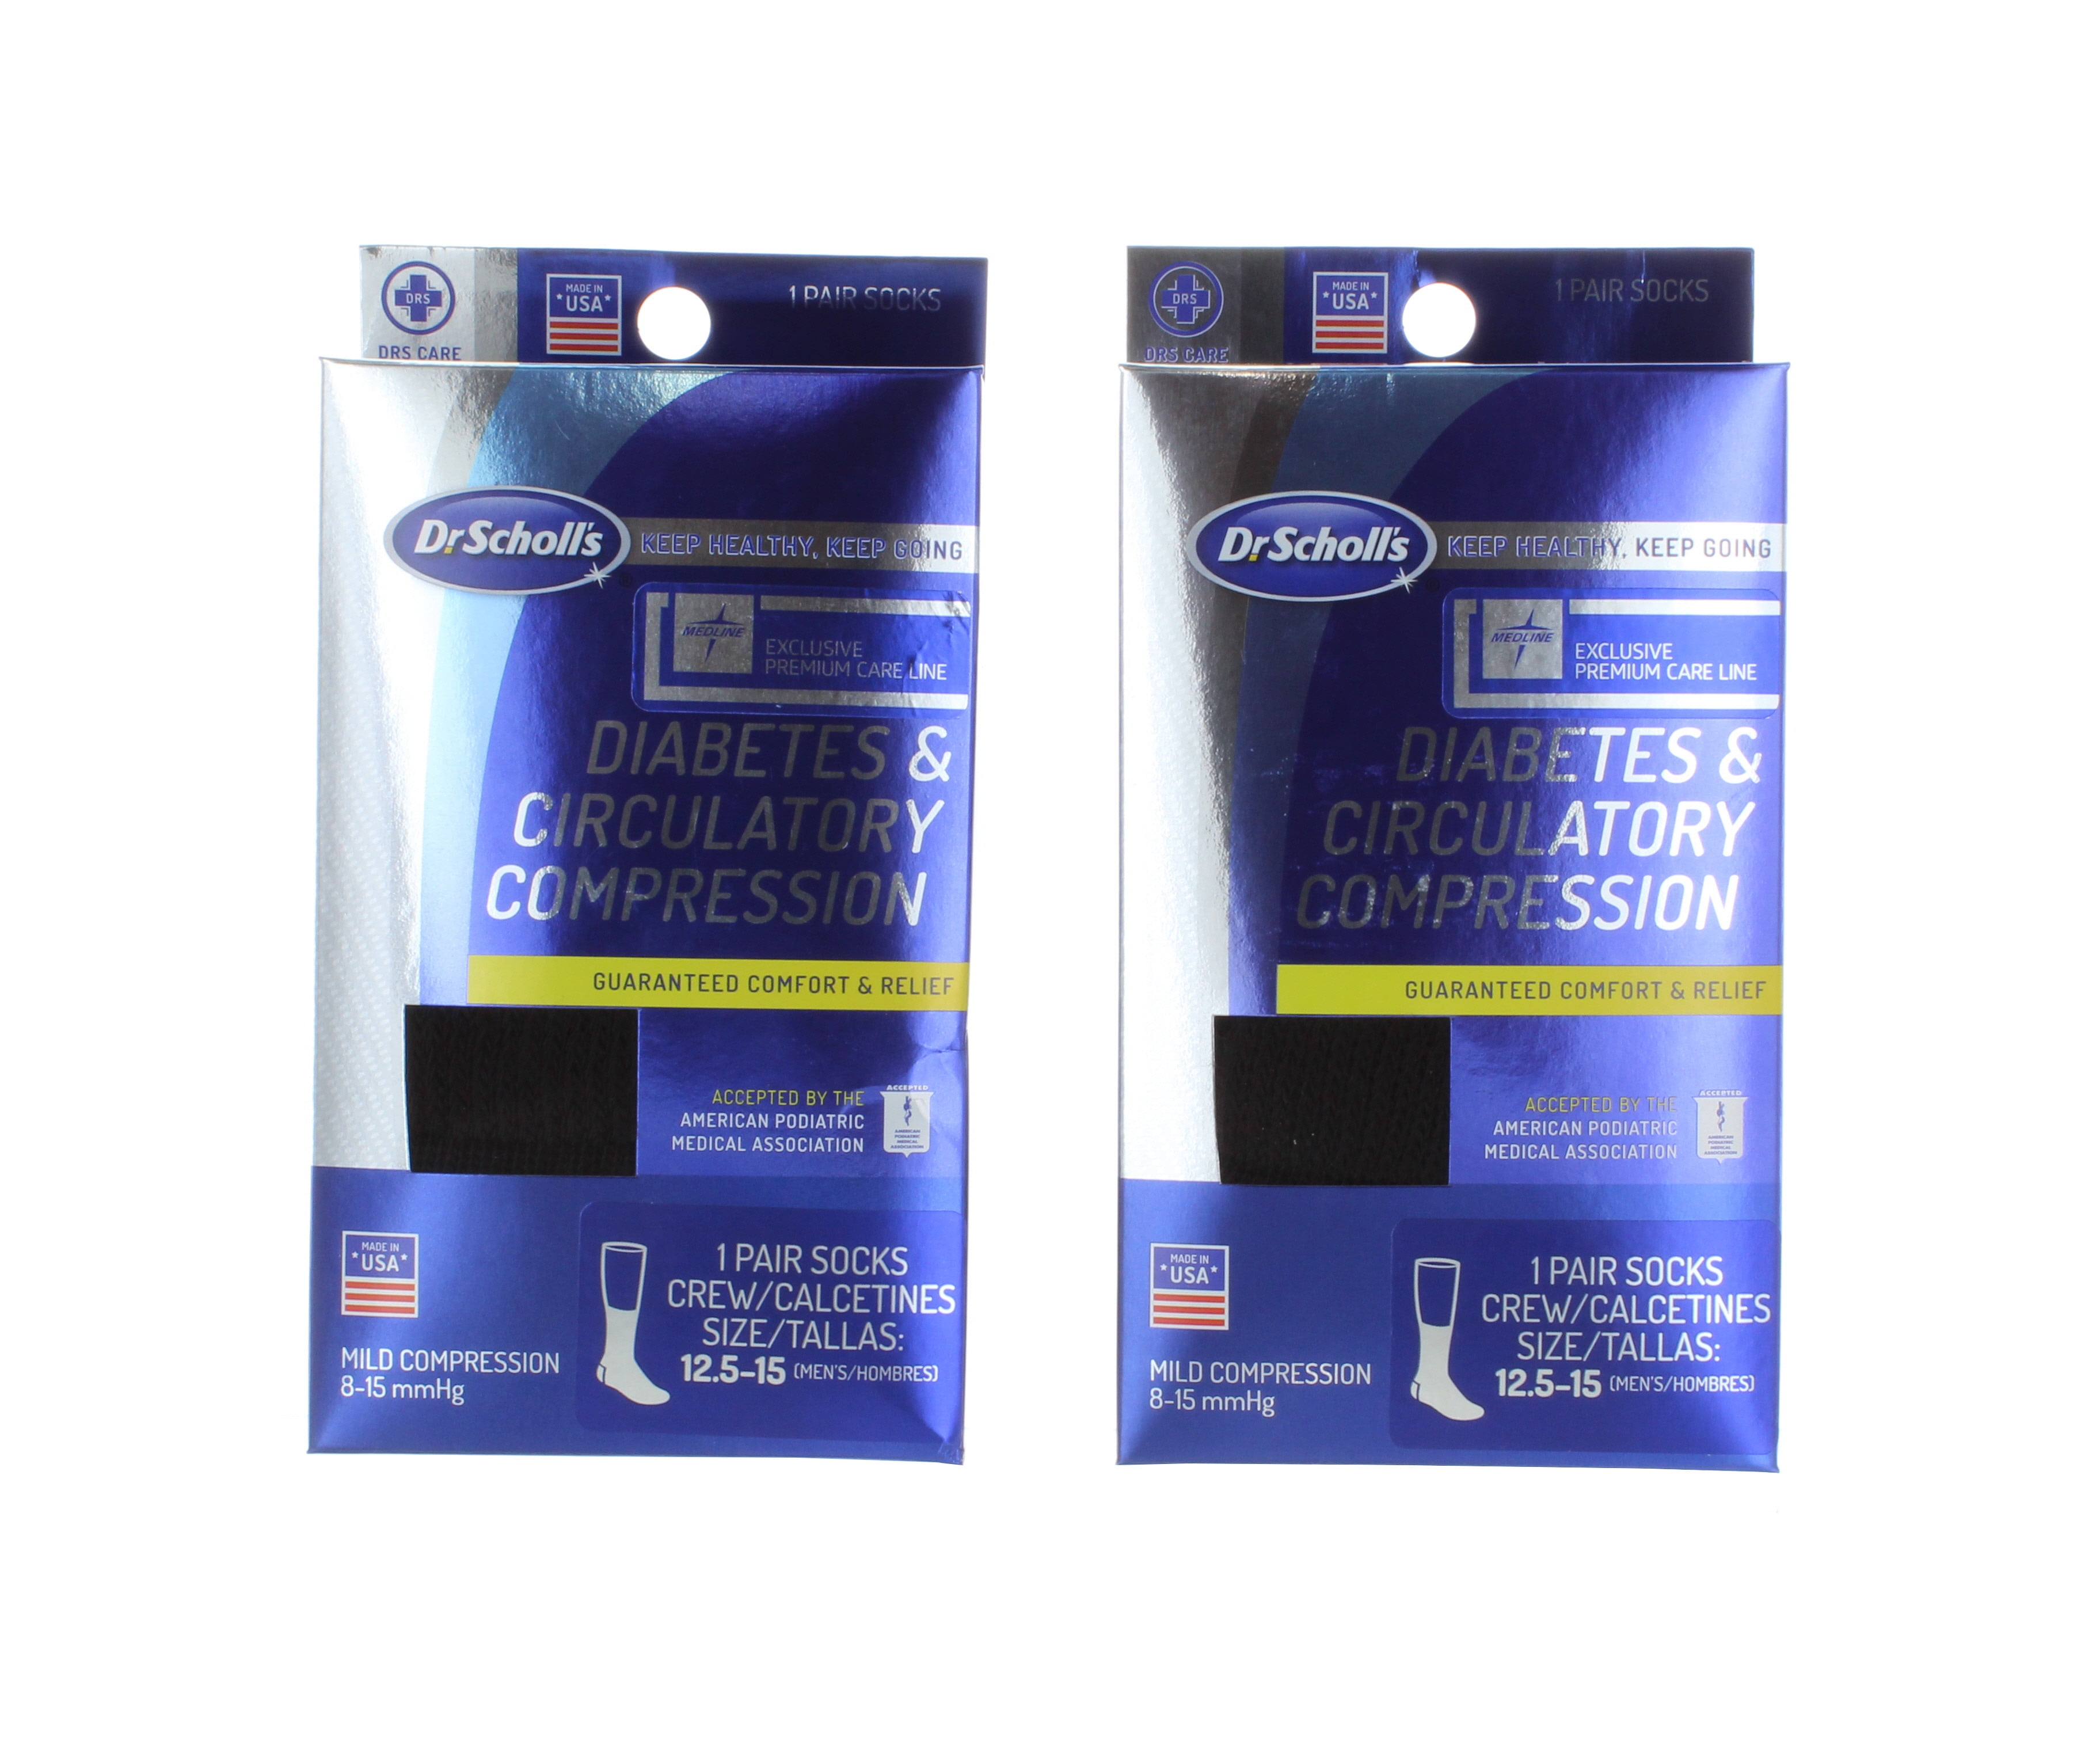 Scholl Flight Socks Compression Hosiery Black M9-12 – Life Pharmacy Orewa